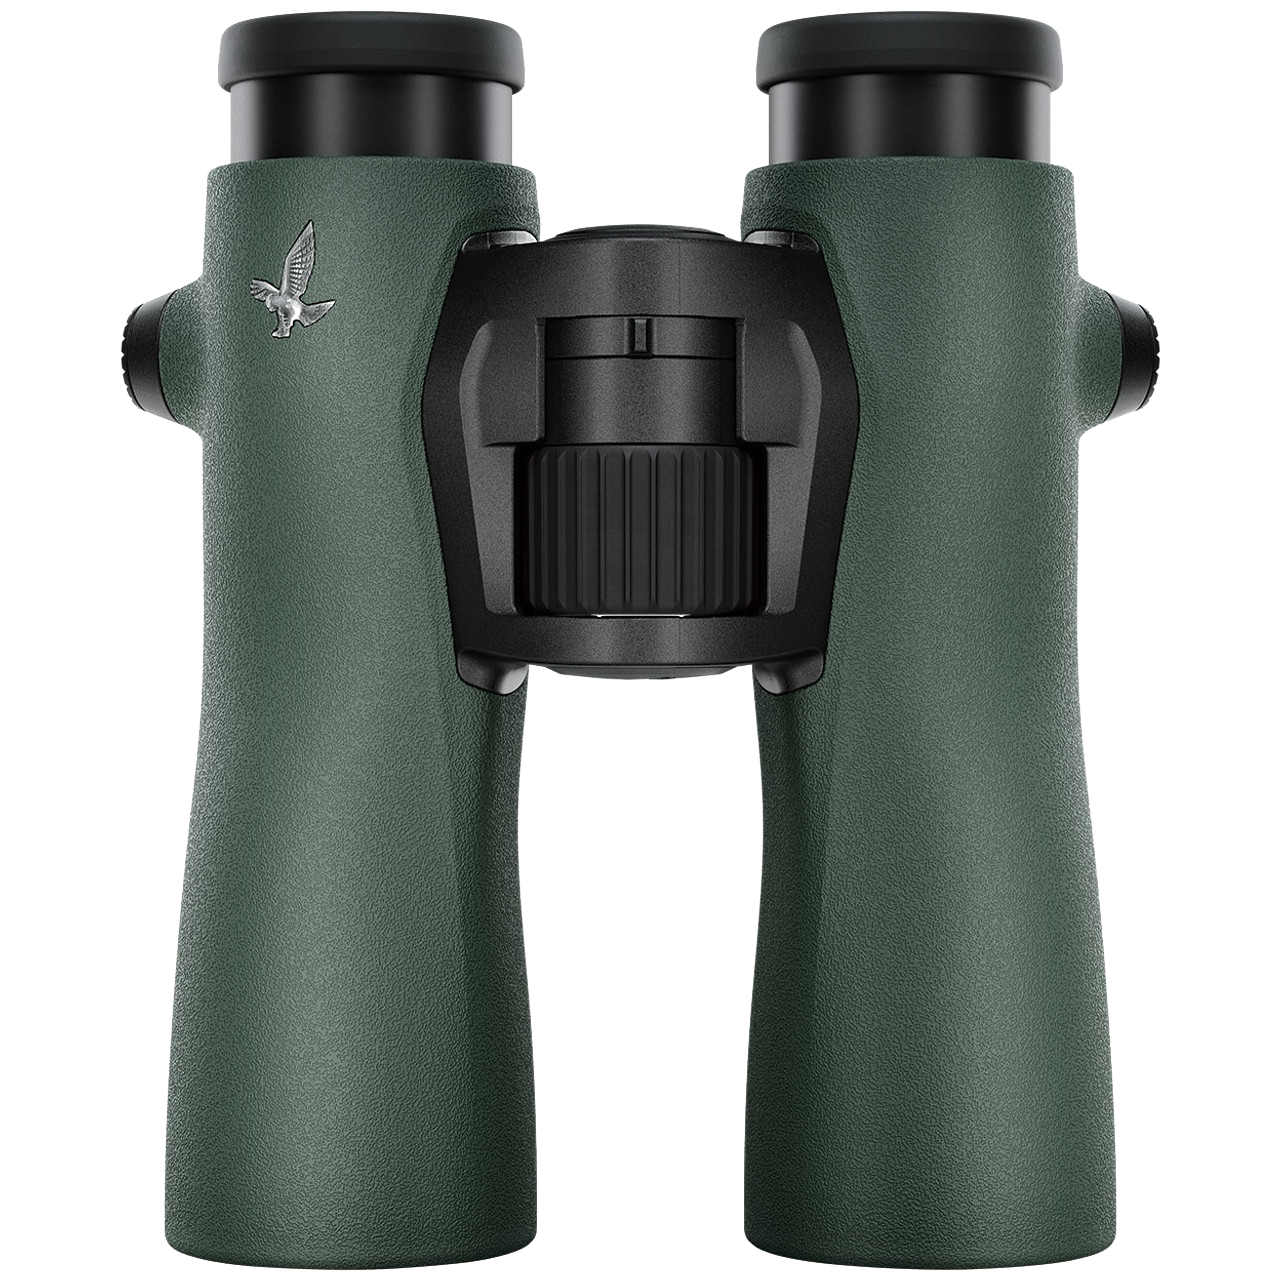 Nikon camouflage coloured binoculars